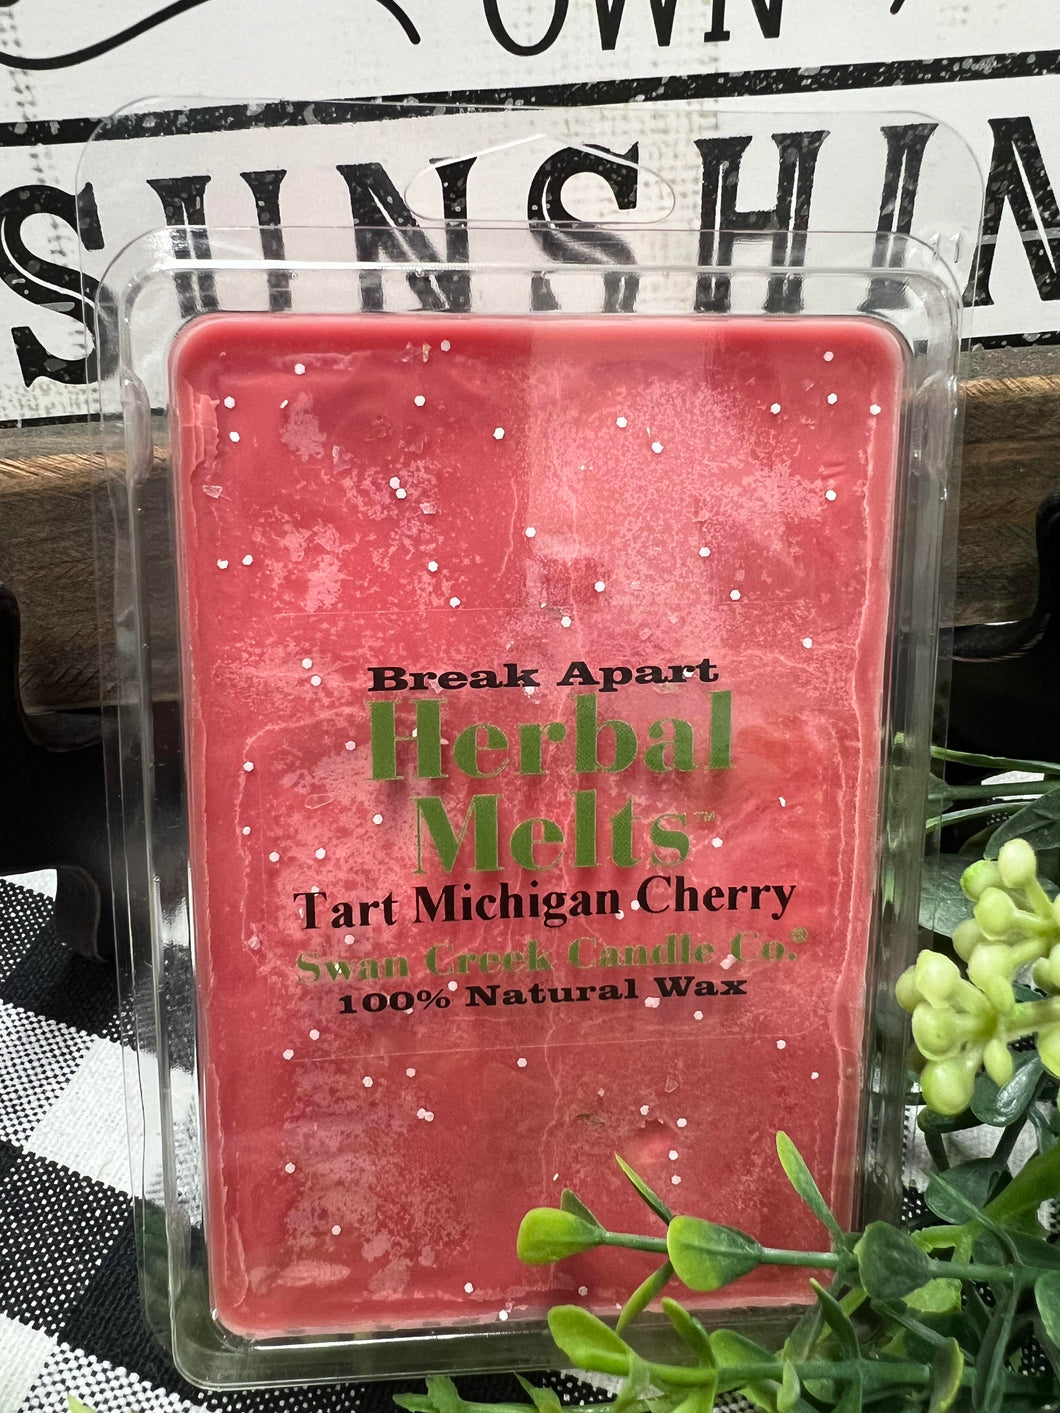 Swan Creek Candle Co. Tart Michigan Cherry Herbal Melts